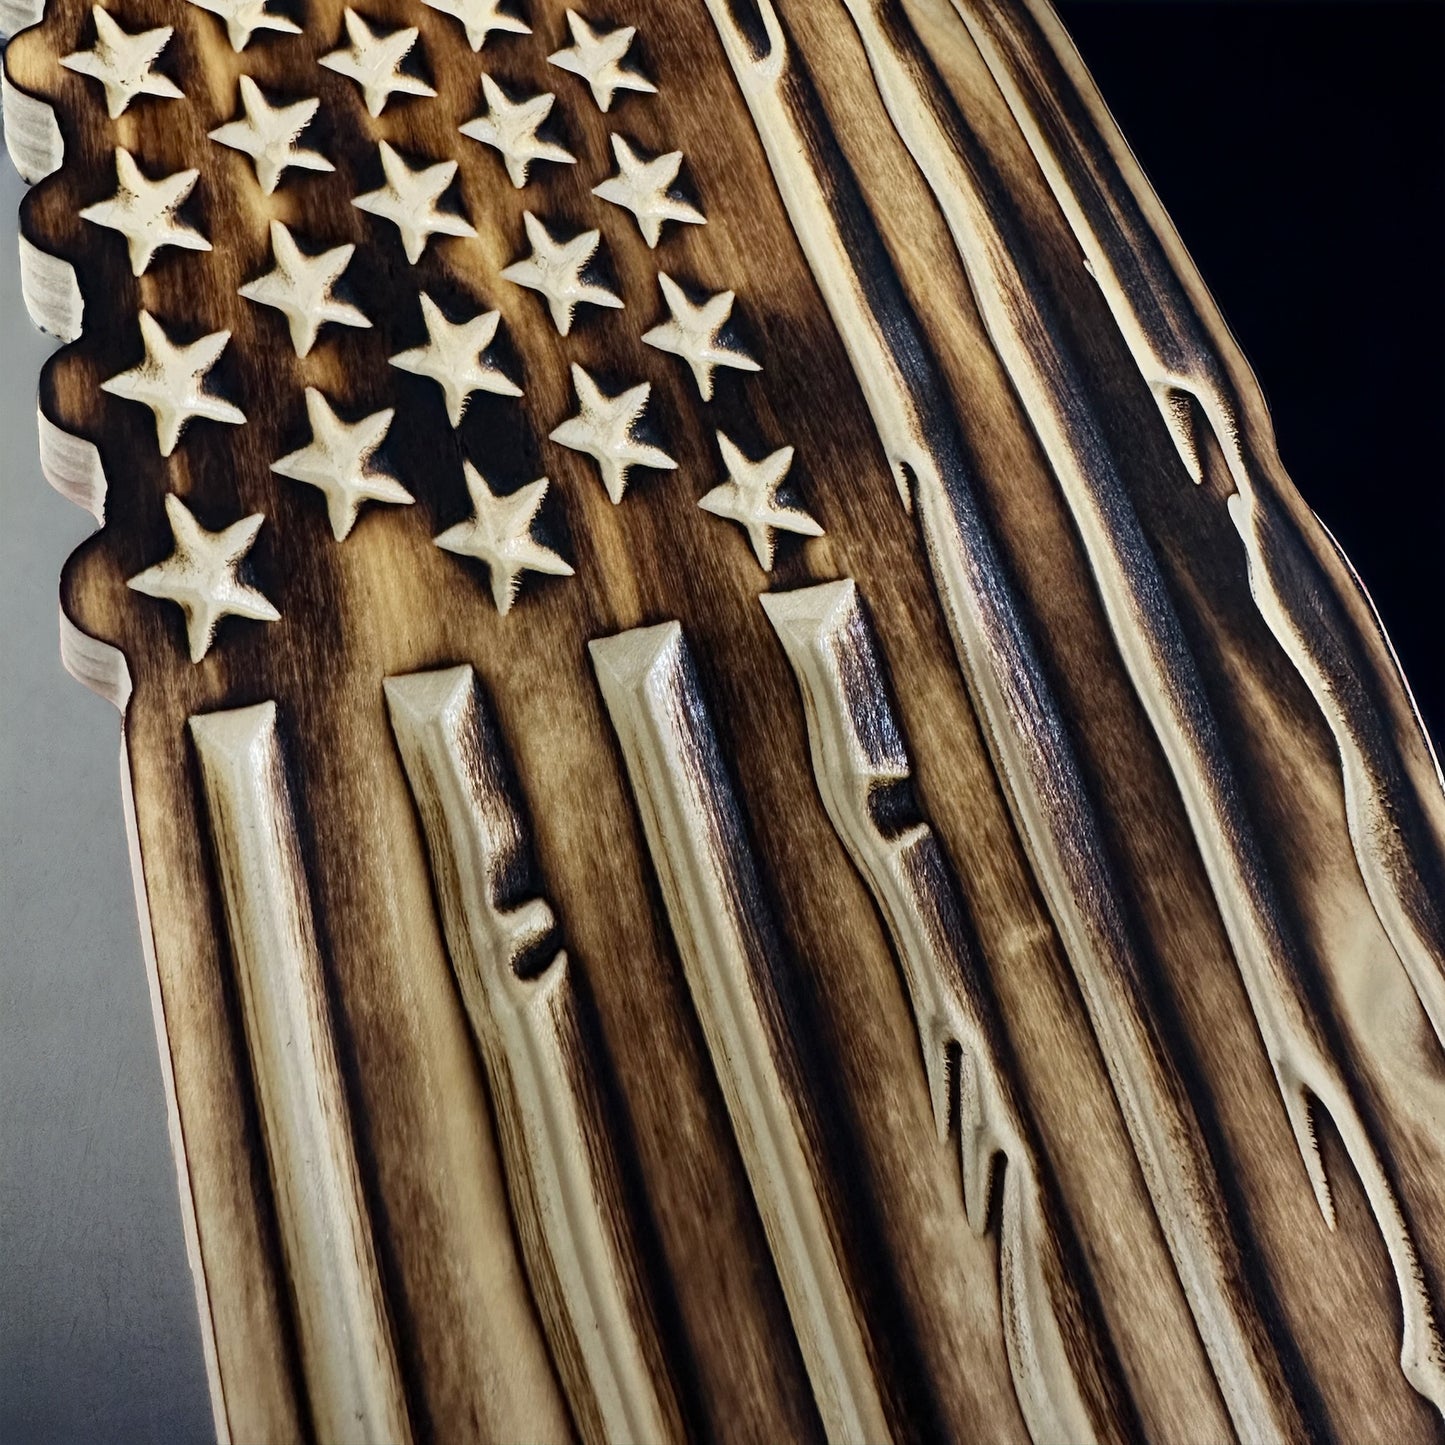 Vertical Rustic America Flag Unique Design Made From Hardwood.